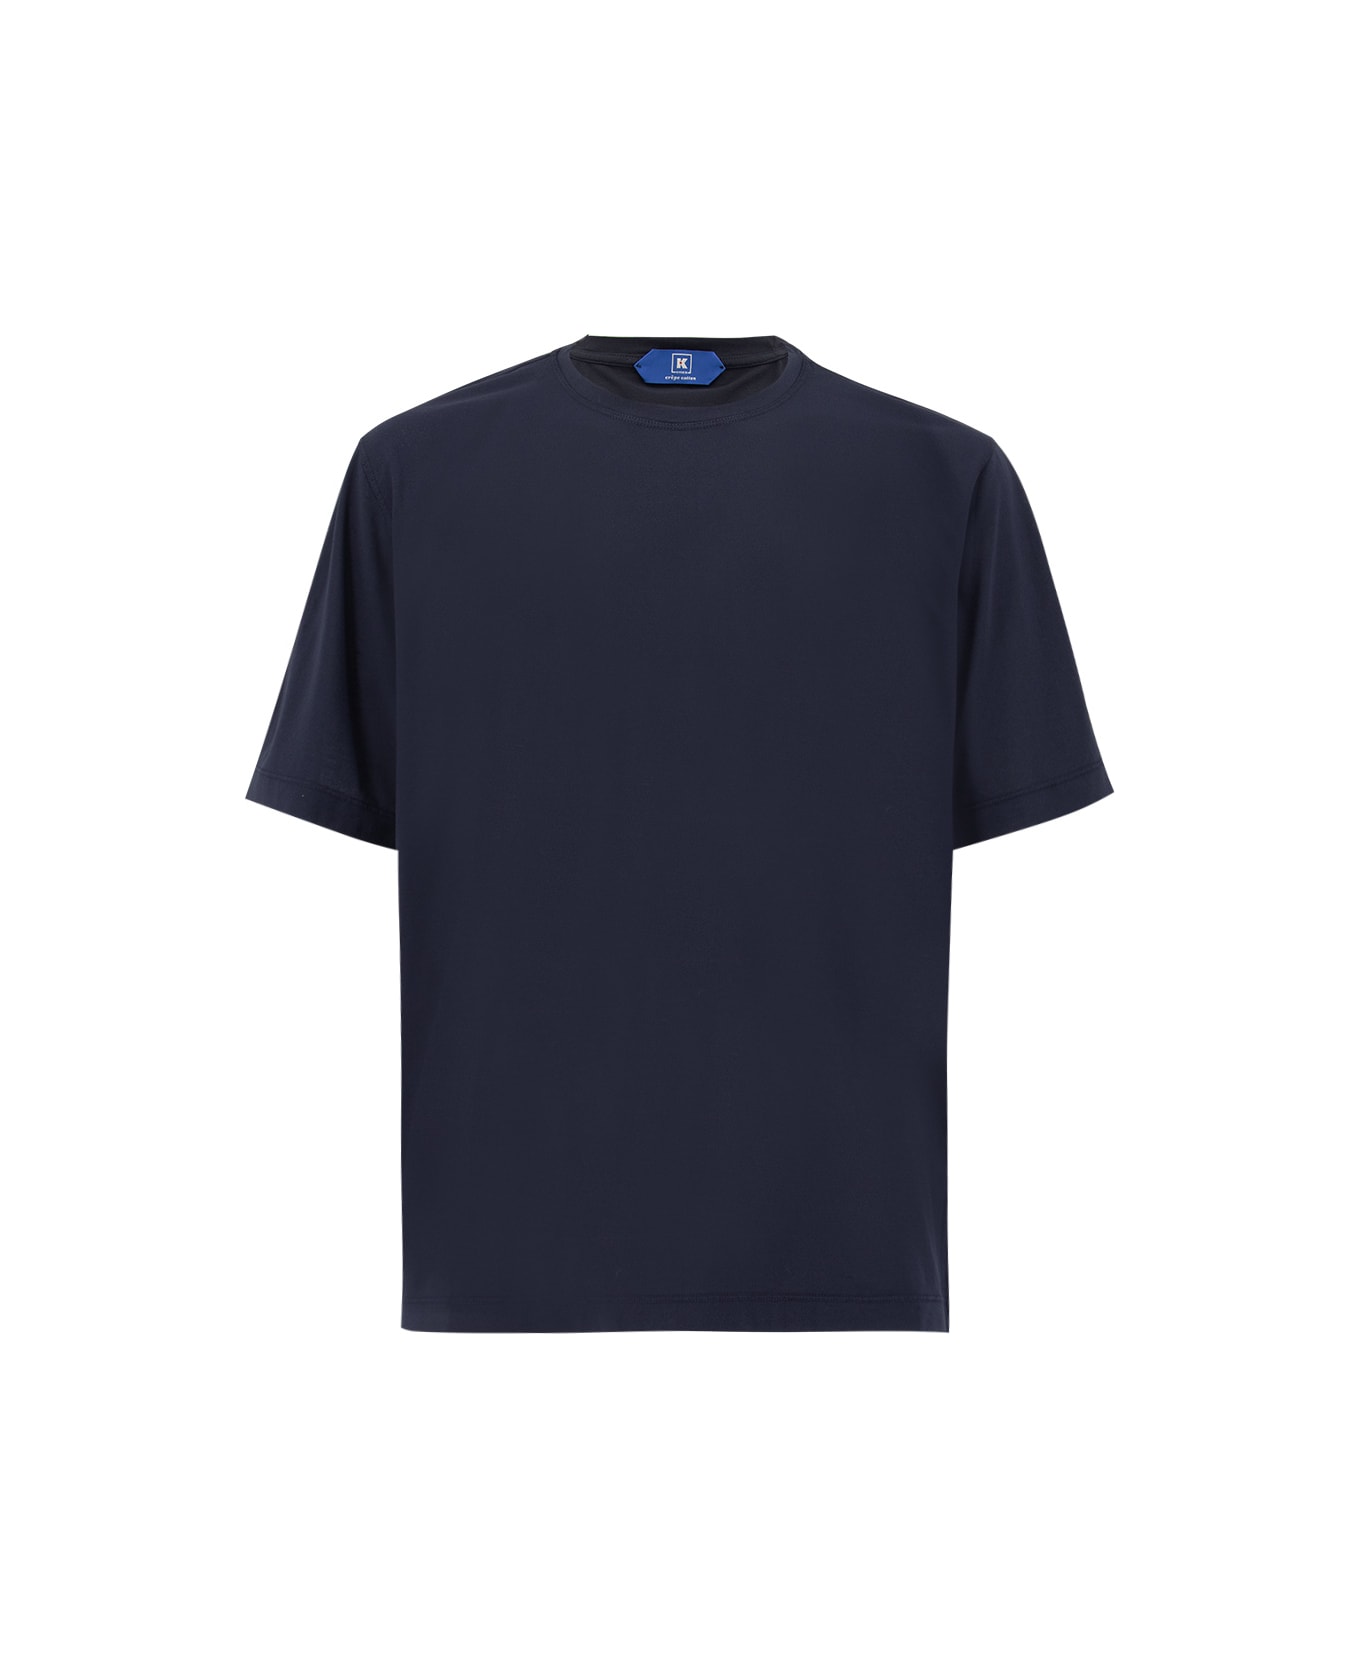 Kired T-shirt - NAVY BLUE シャツ